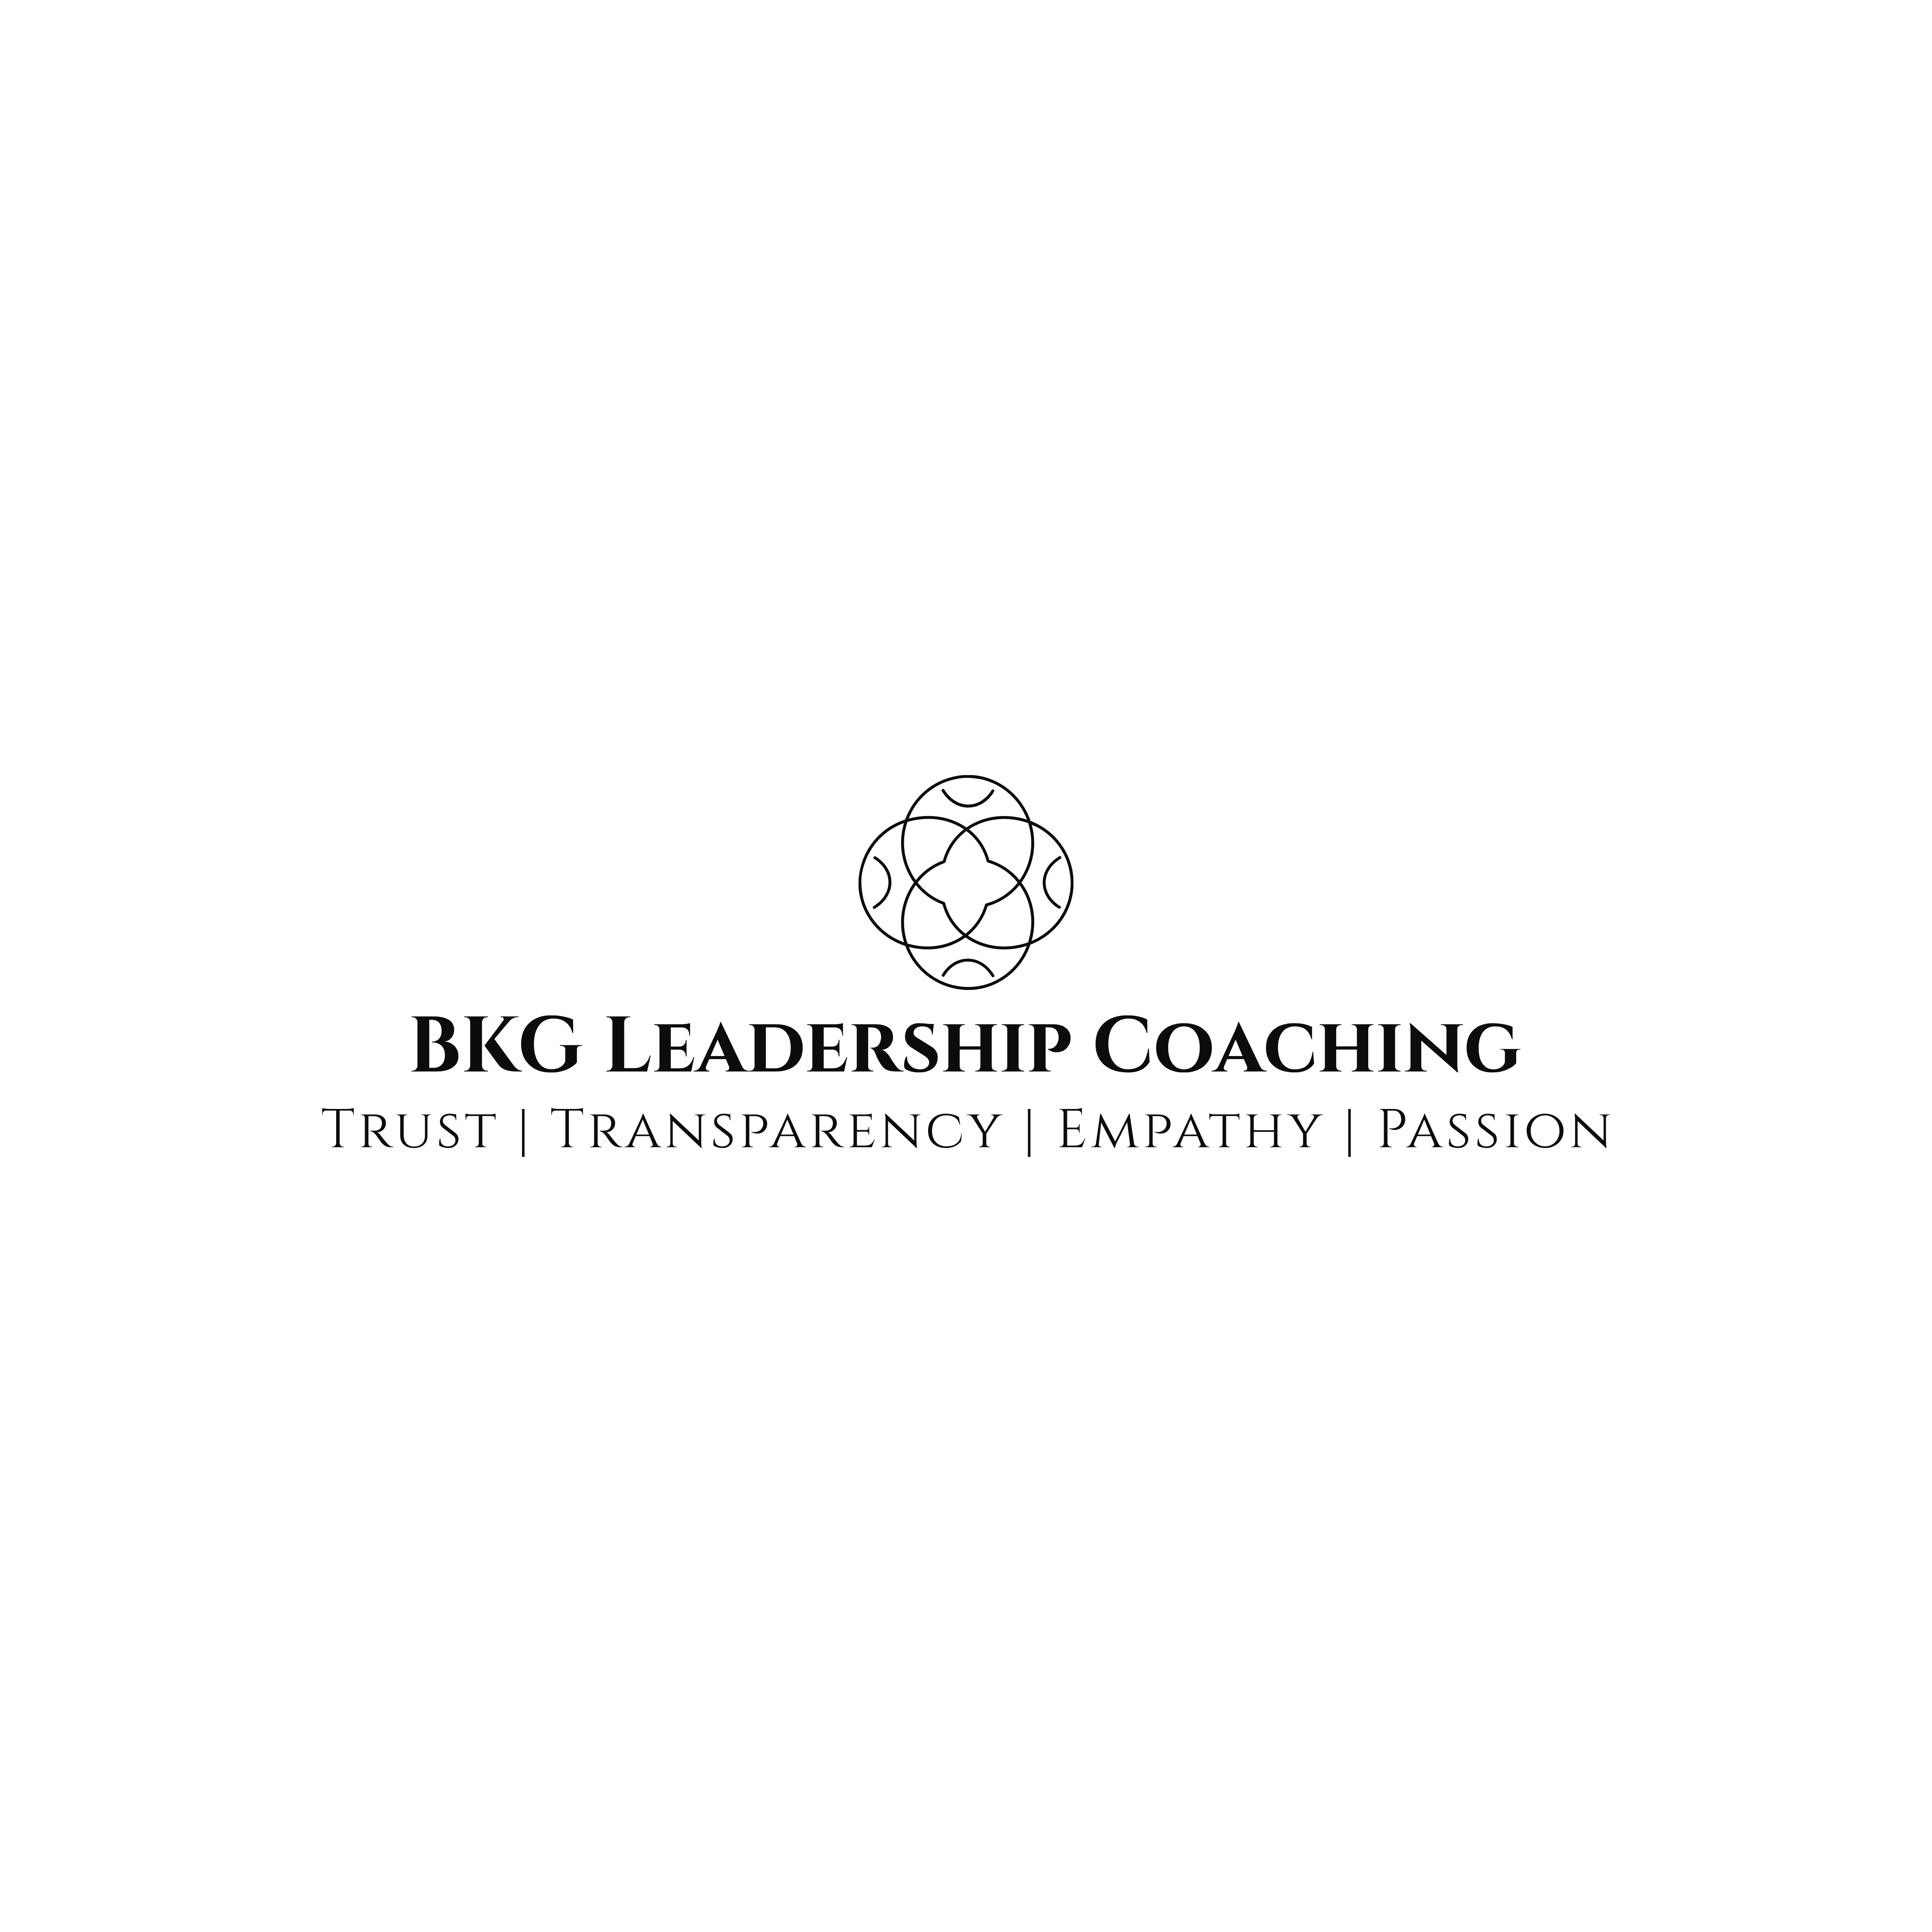 BKG Leadership Coaching